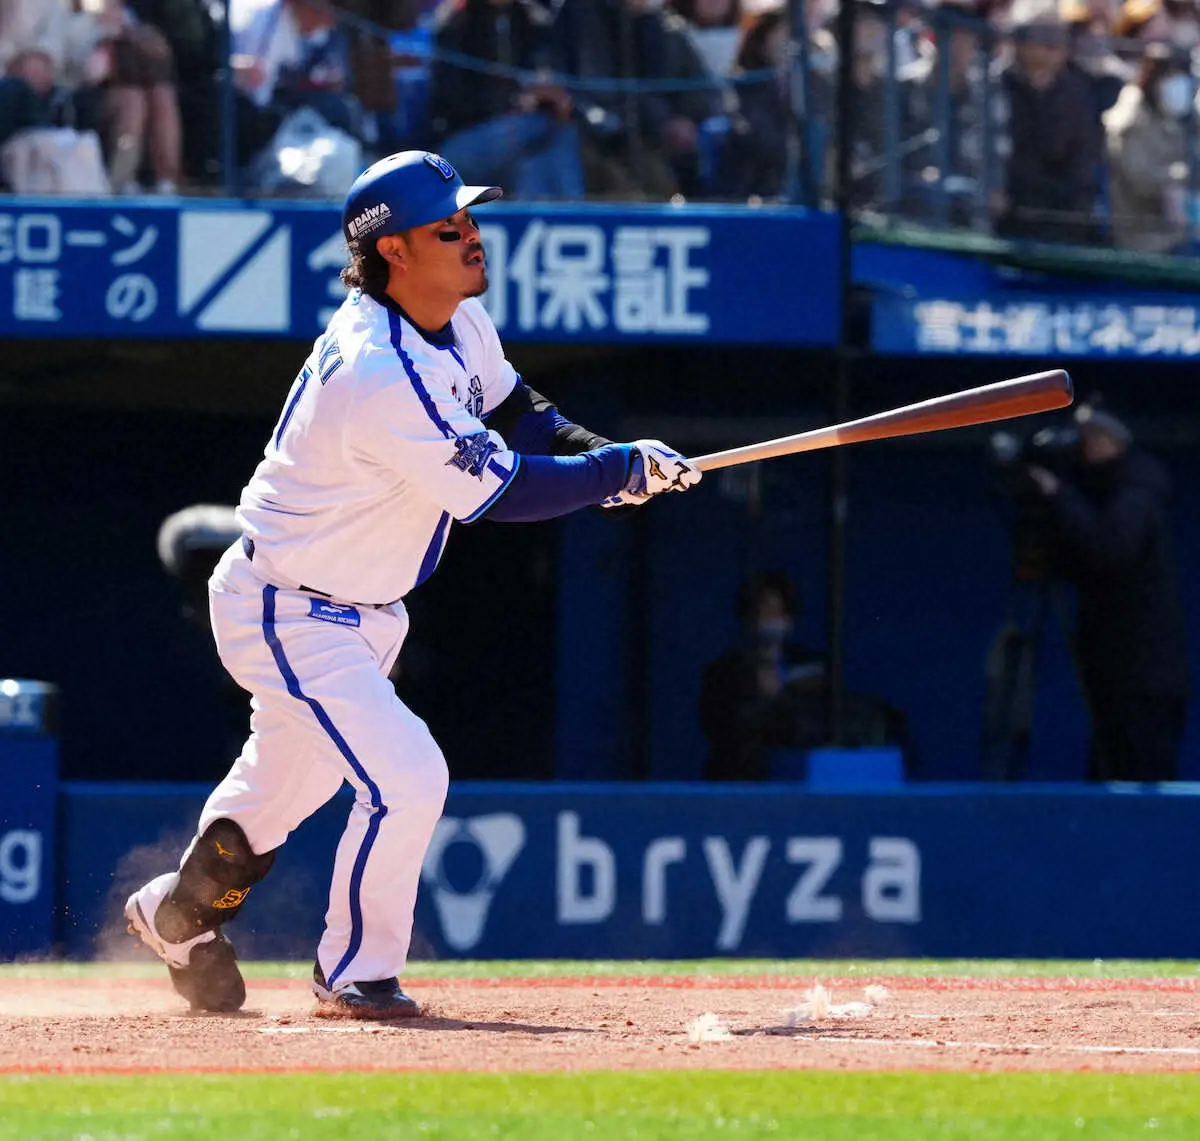 DeNA・宮崎　2打席連続本塁打で大勝に貢献「ここまでケガなくいい調整ができている」